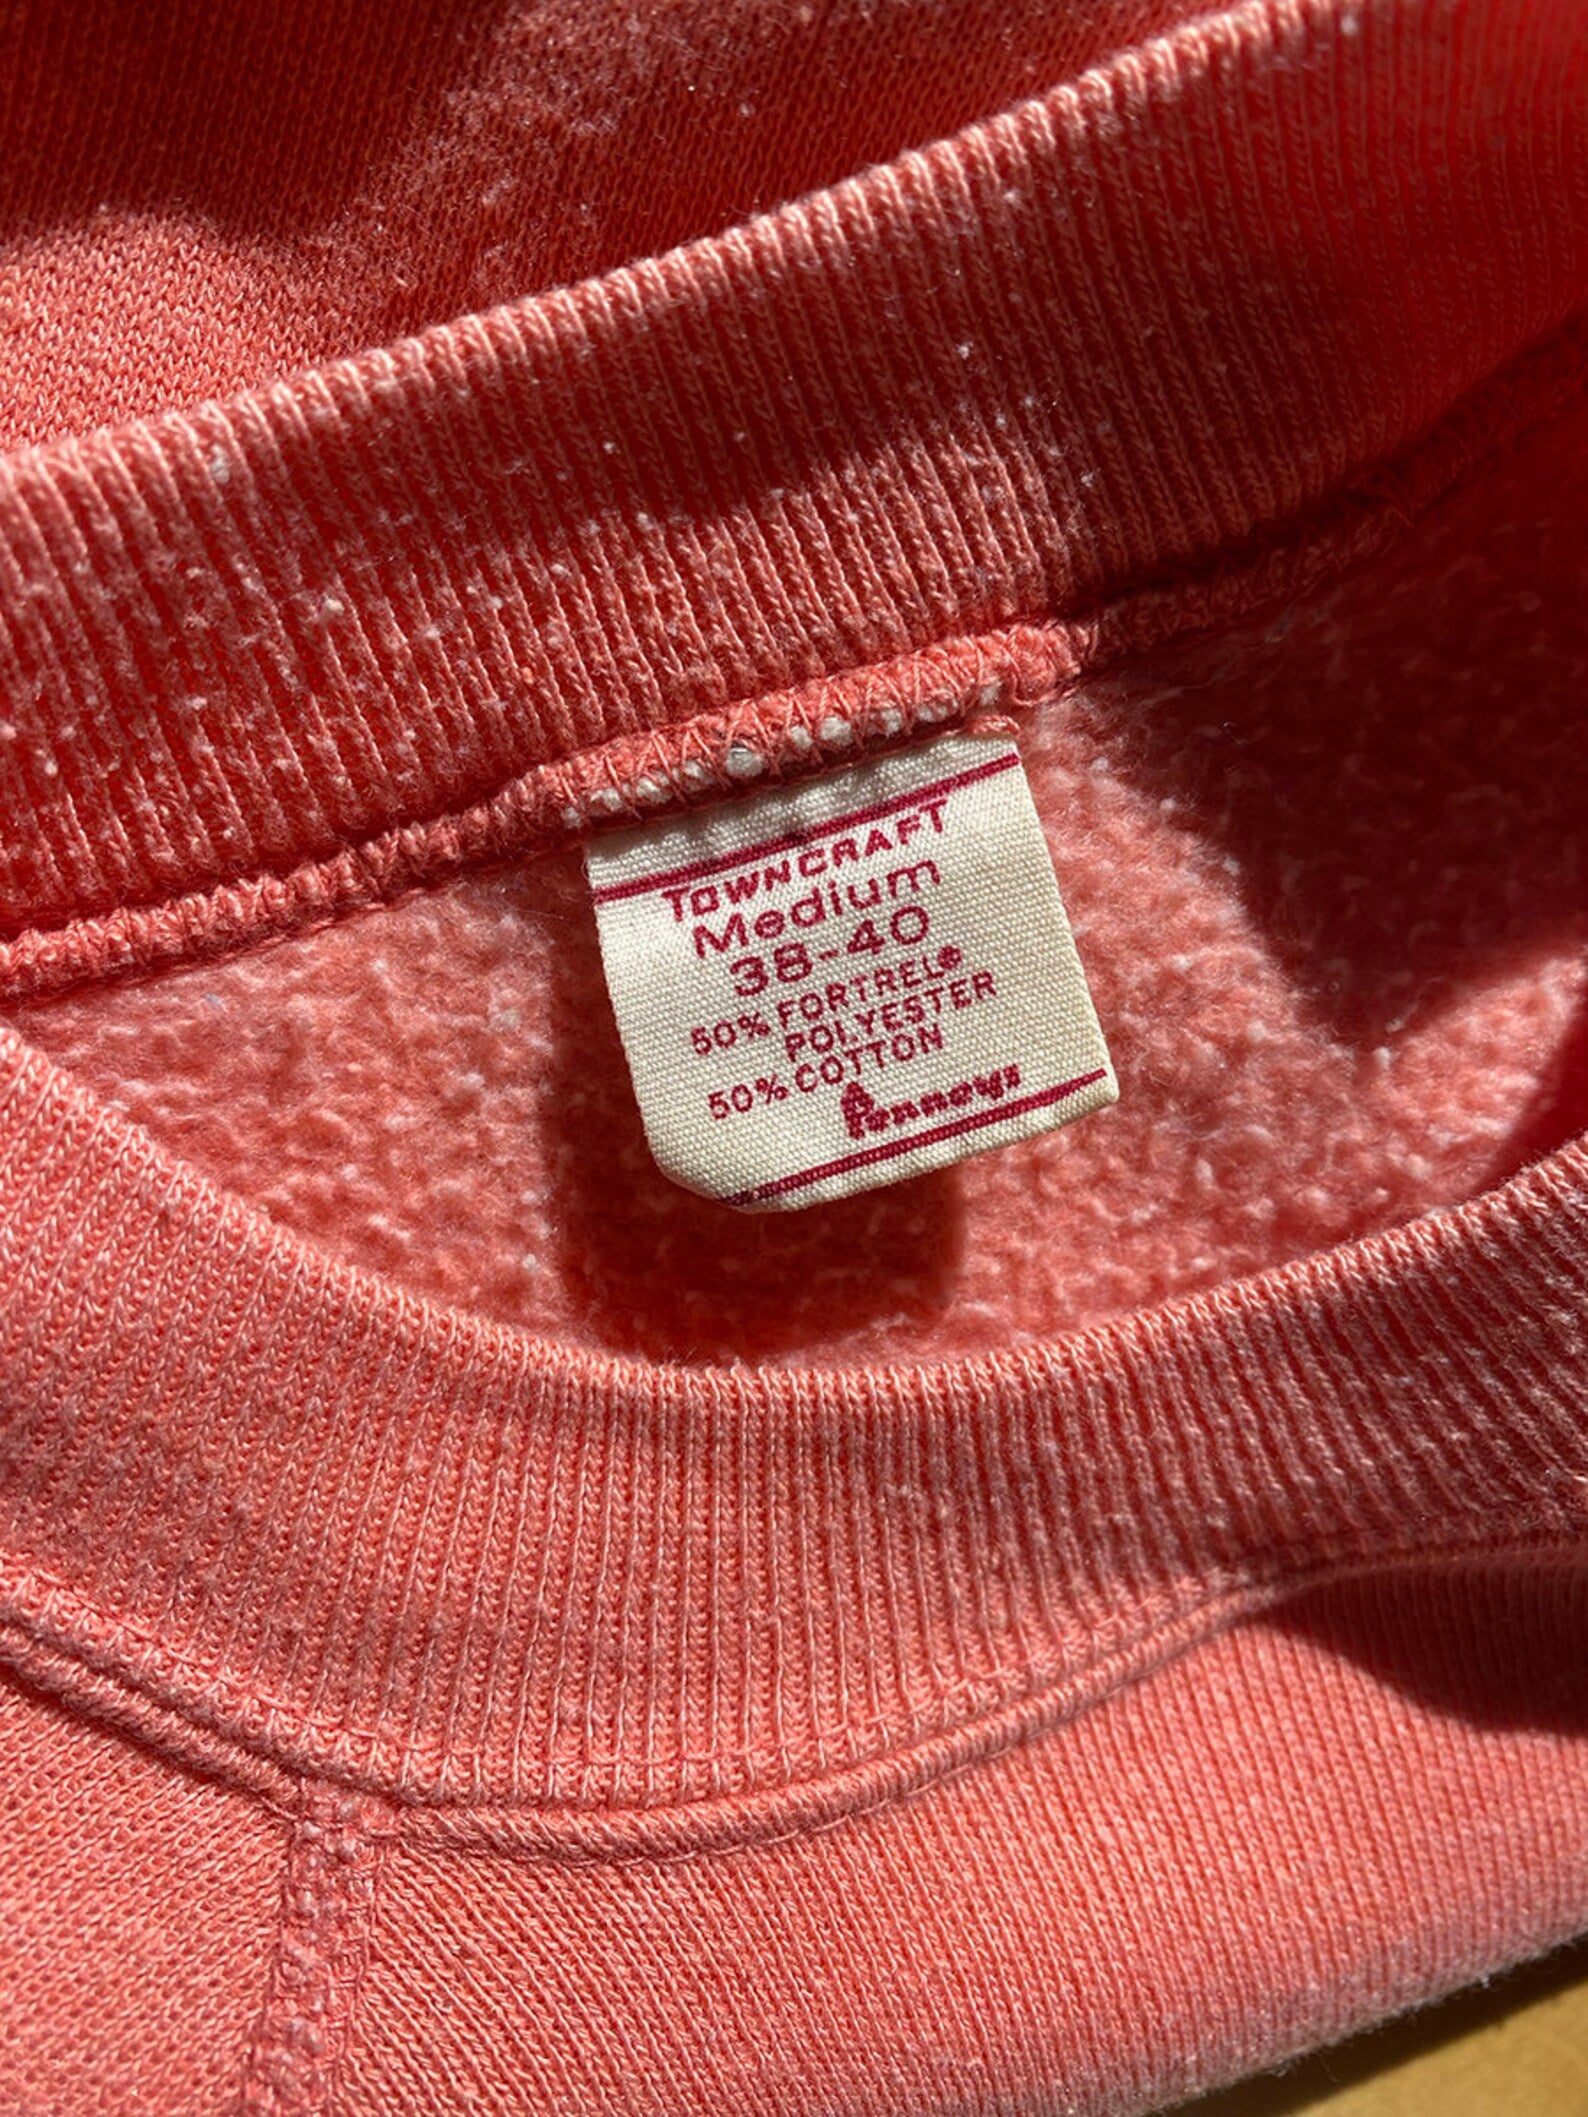 1970's Towncraft Blank Sweatshirt